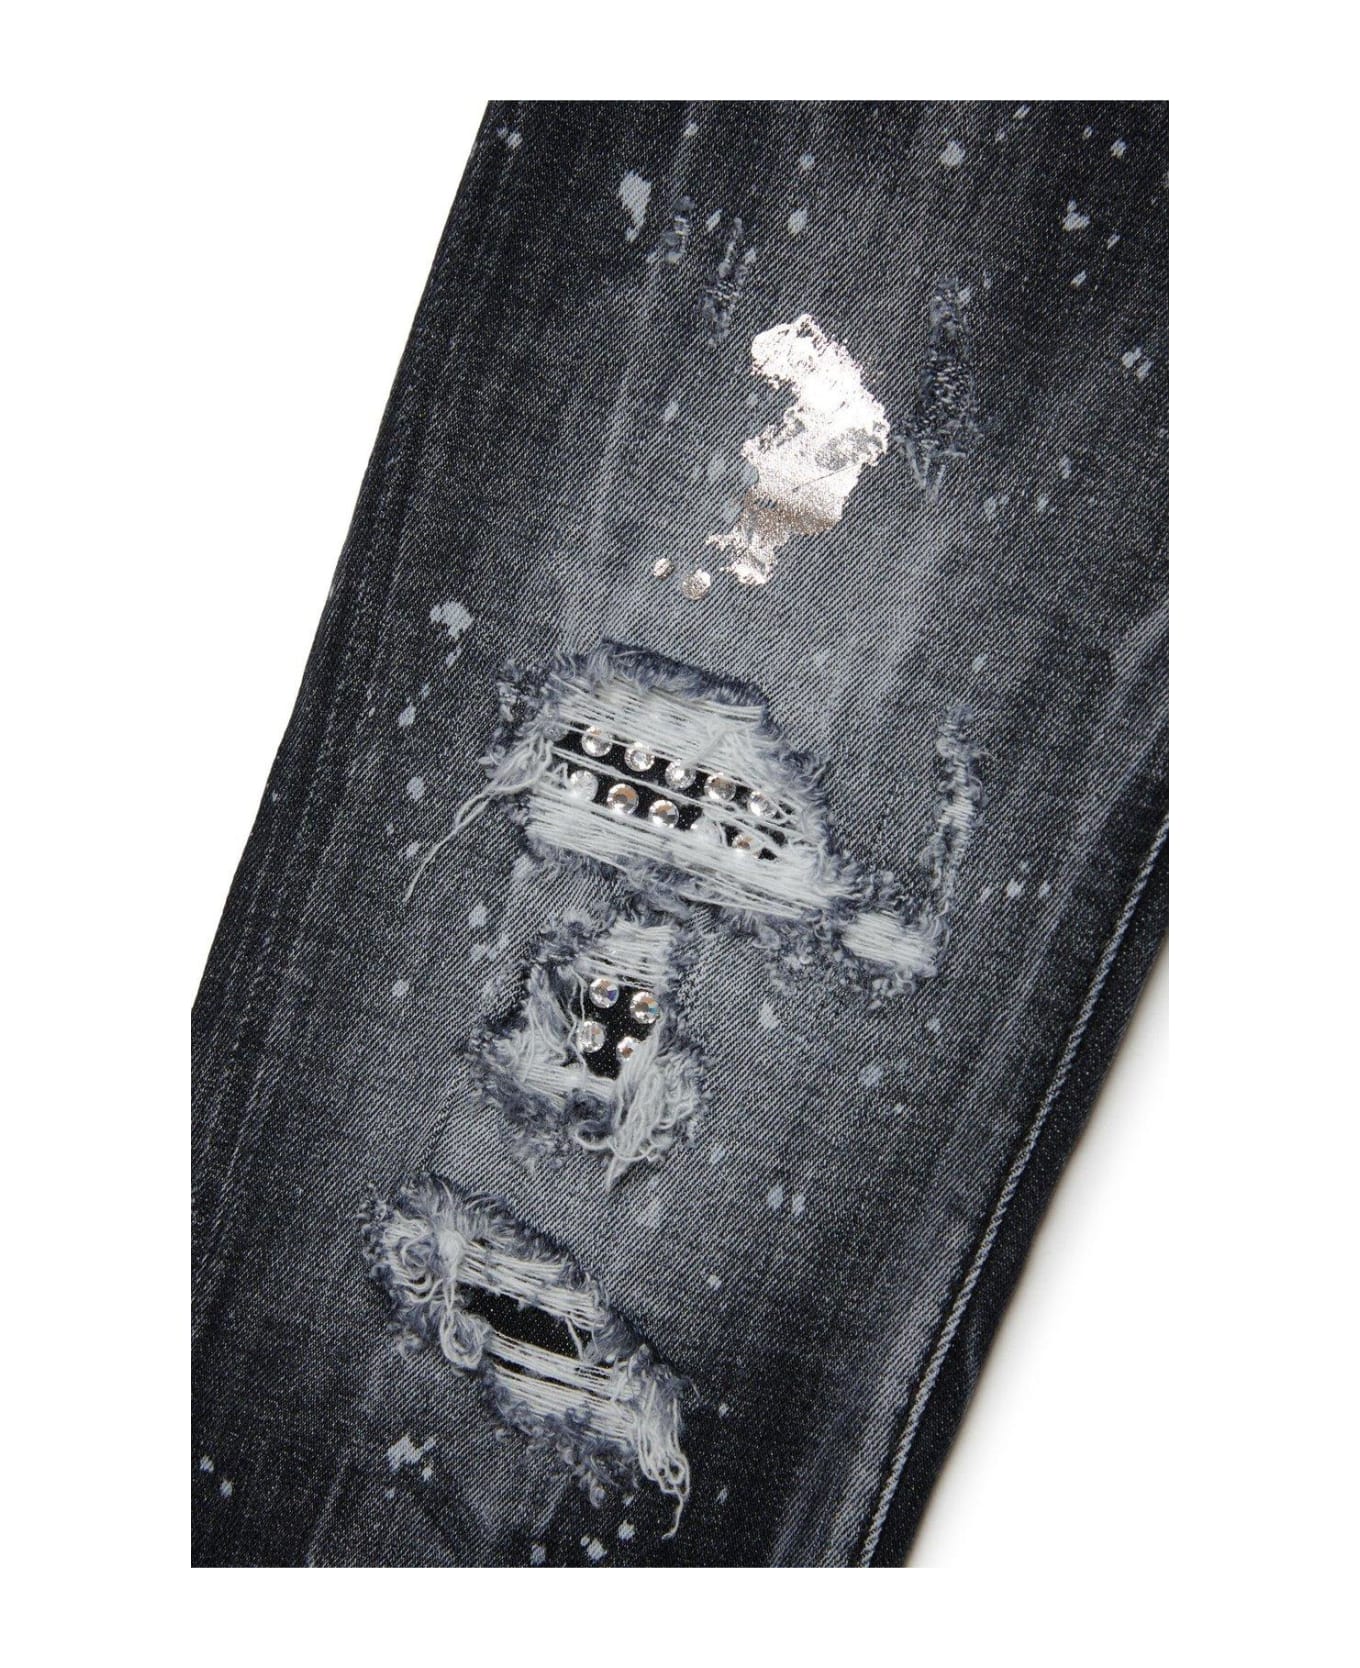 Dsquared2 Paint Splatter-detail Straight-leg Distressed Jeans - Denim Black